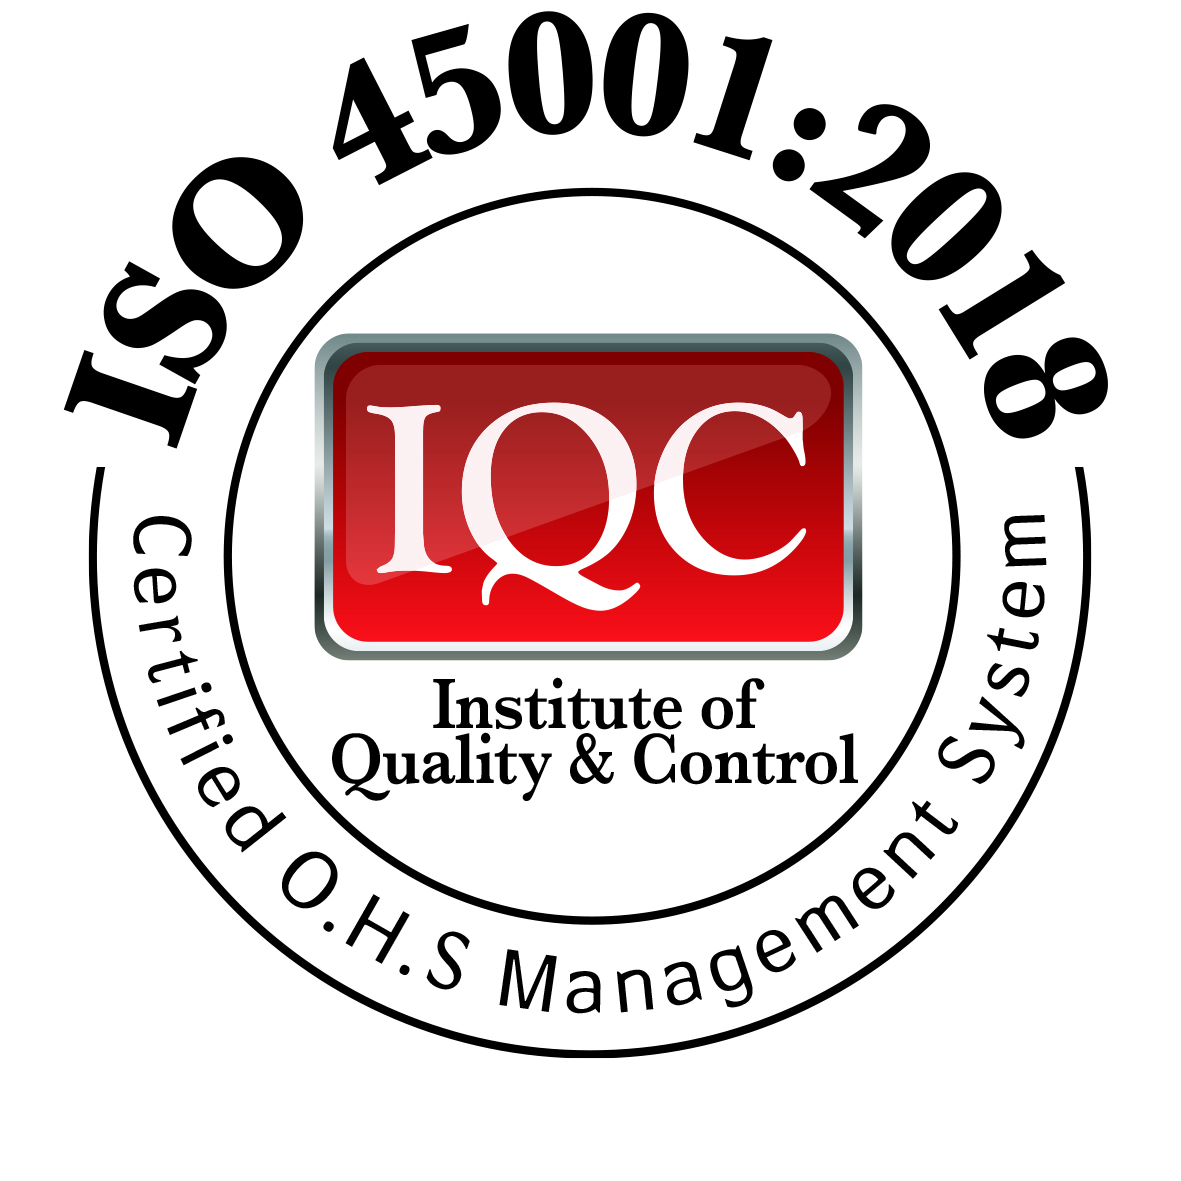 ISO 45001 logo - IQC